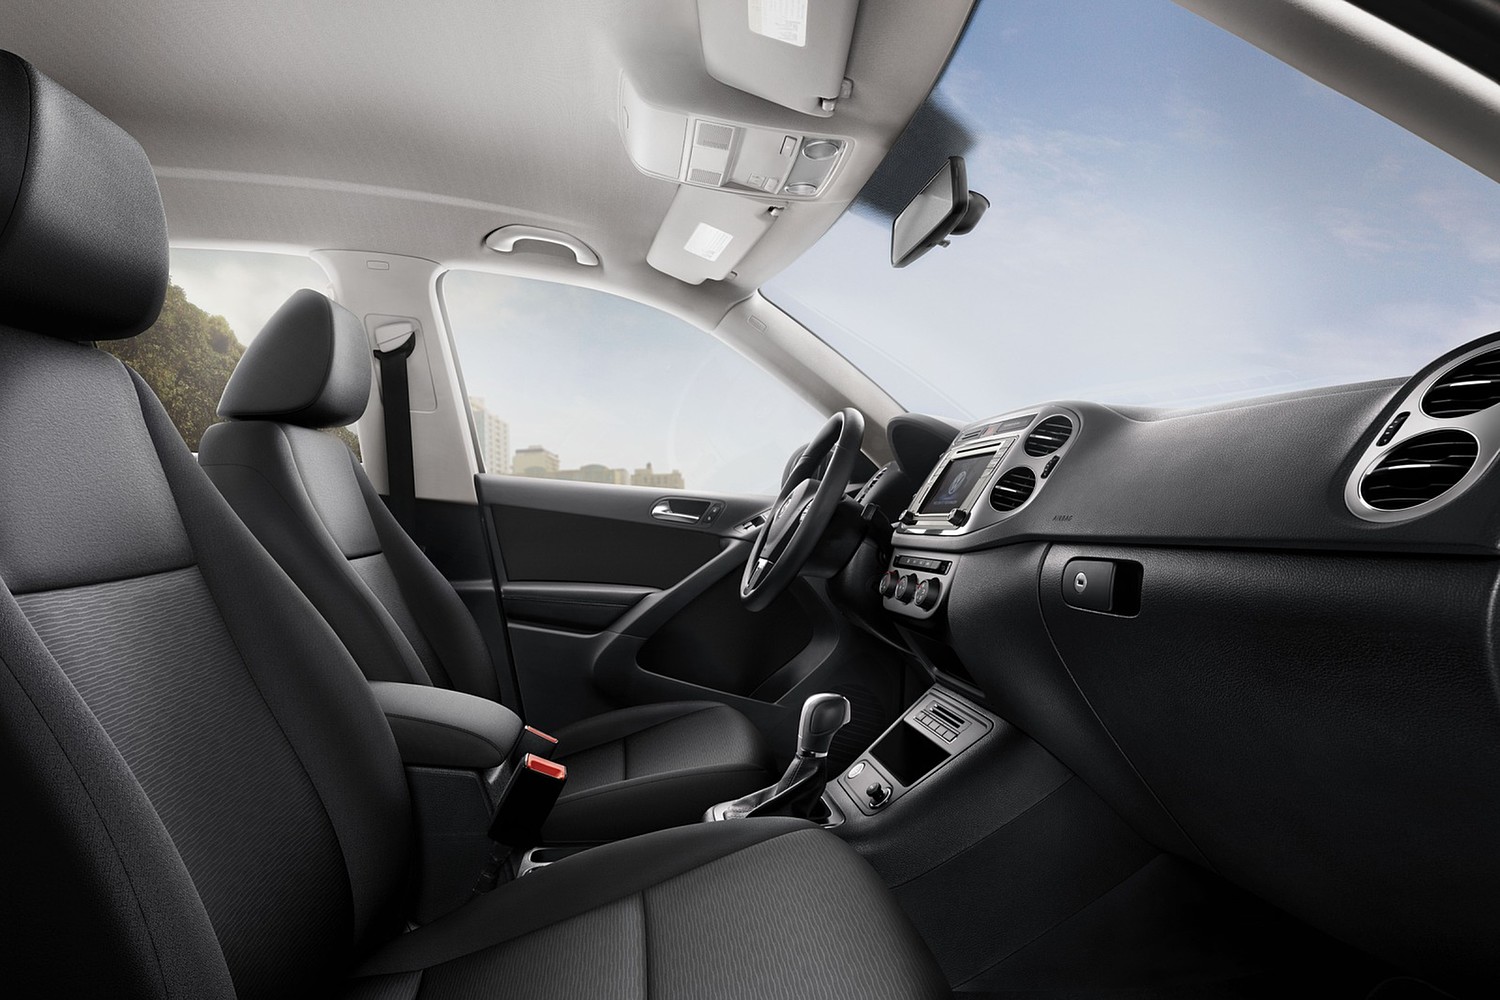 2017 Volkswagen Tiguan Limited S 4Motion 4dr SUV Interior